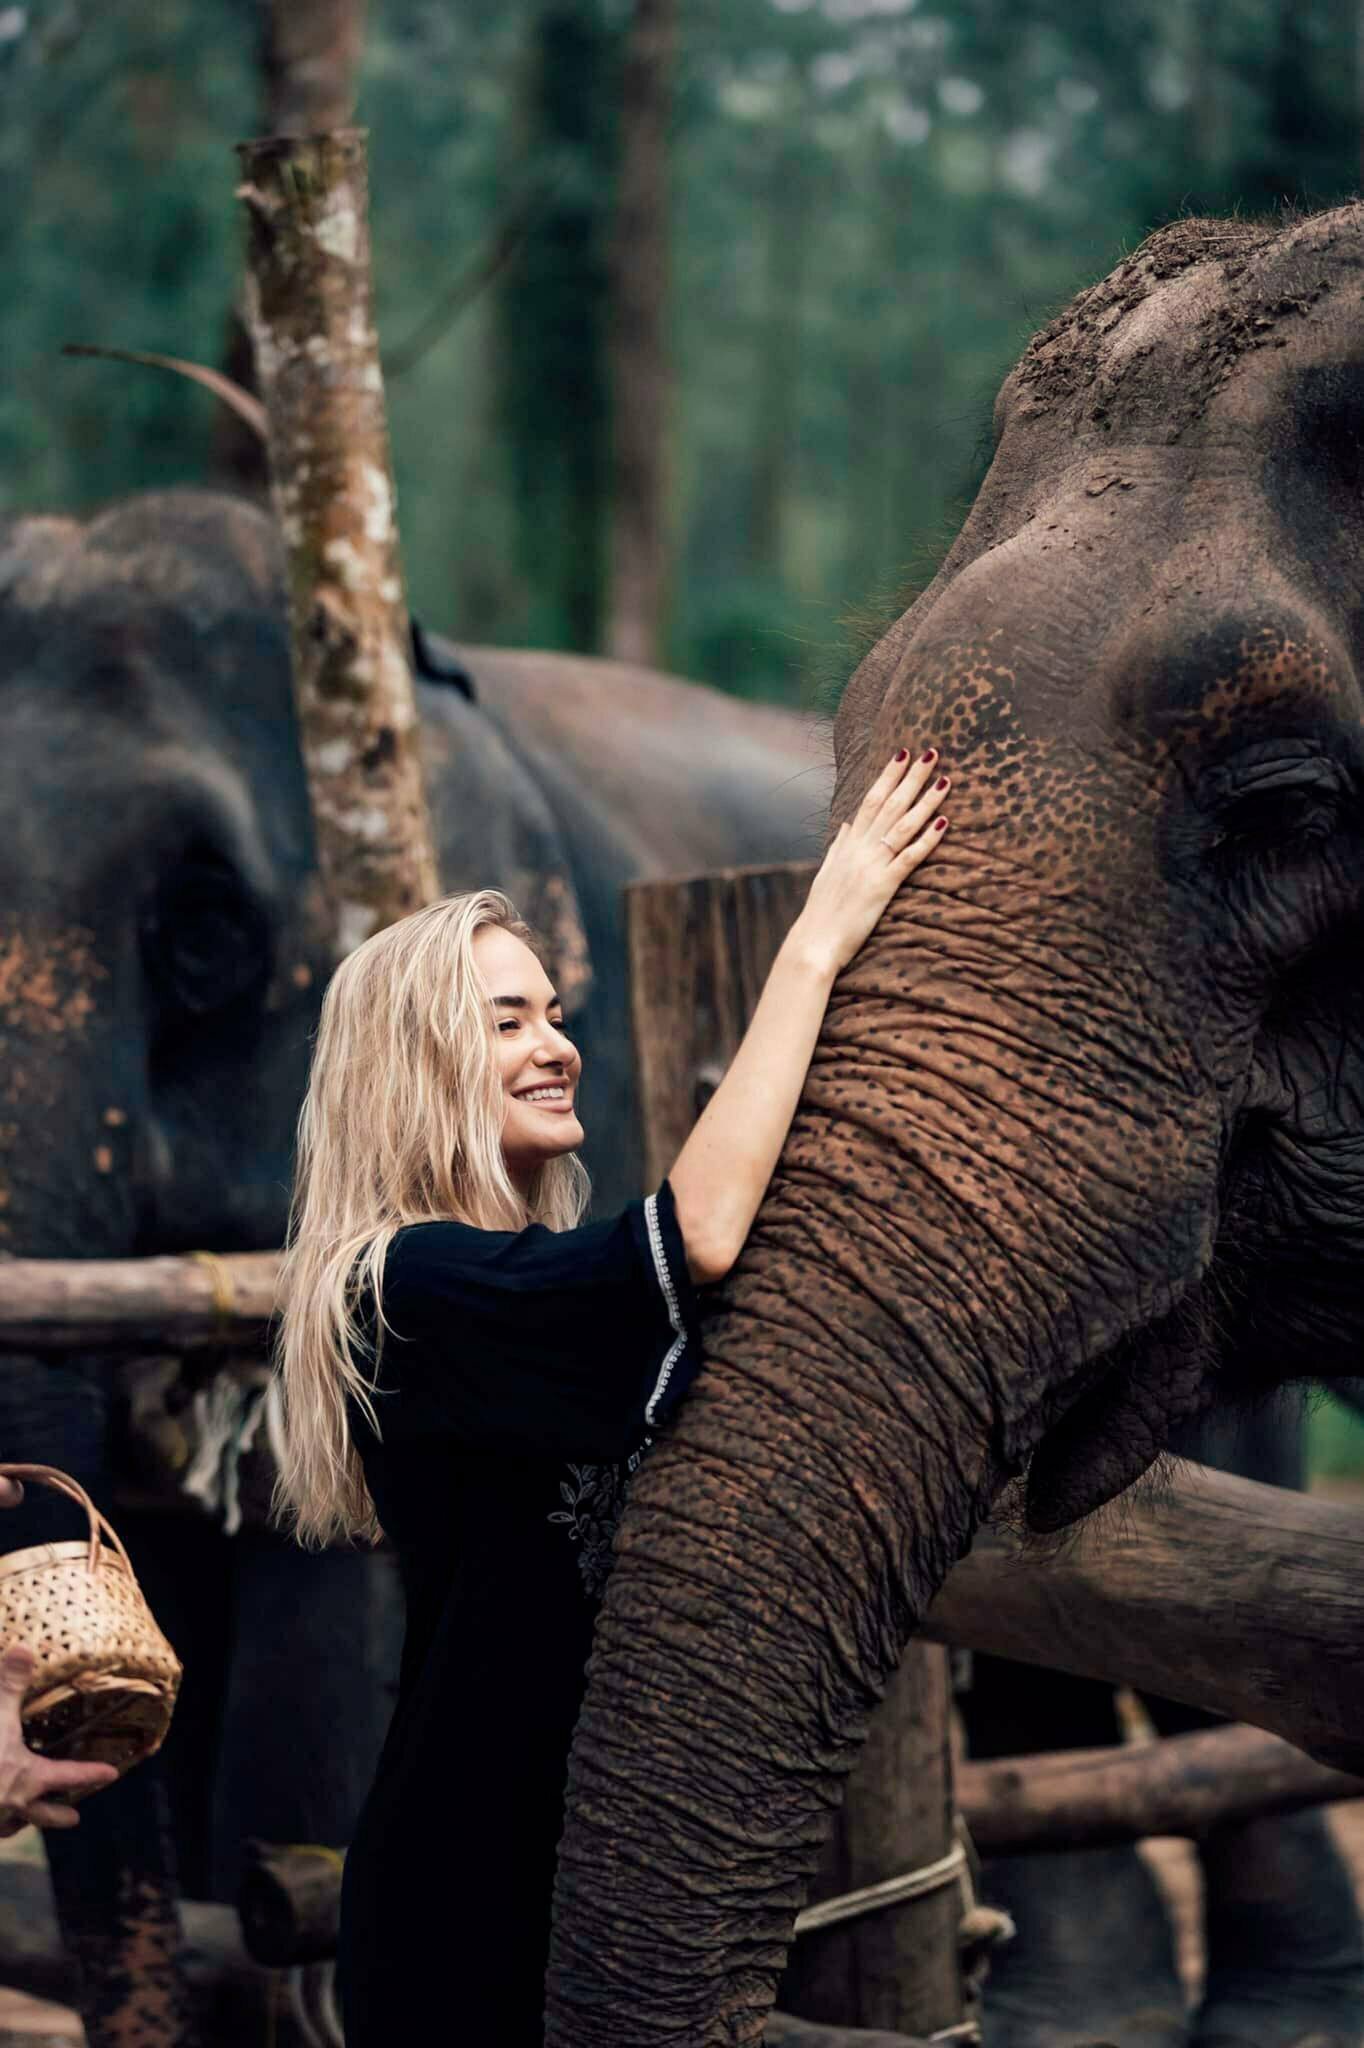 Friendly elephant getting pet by a woman